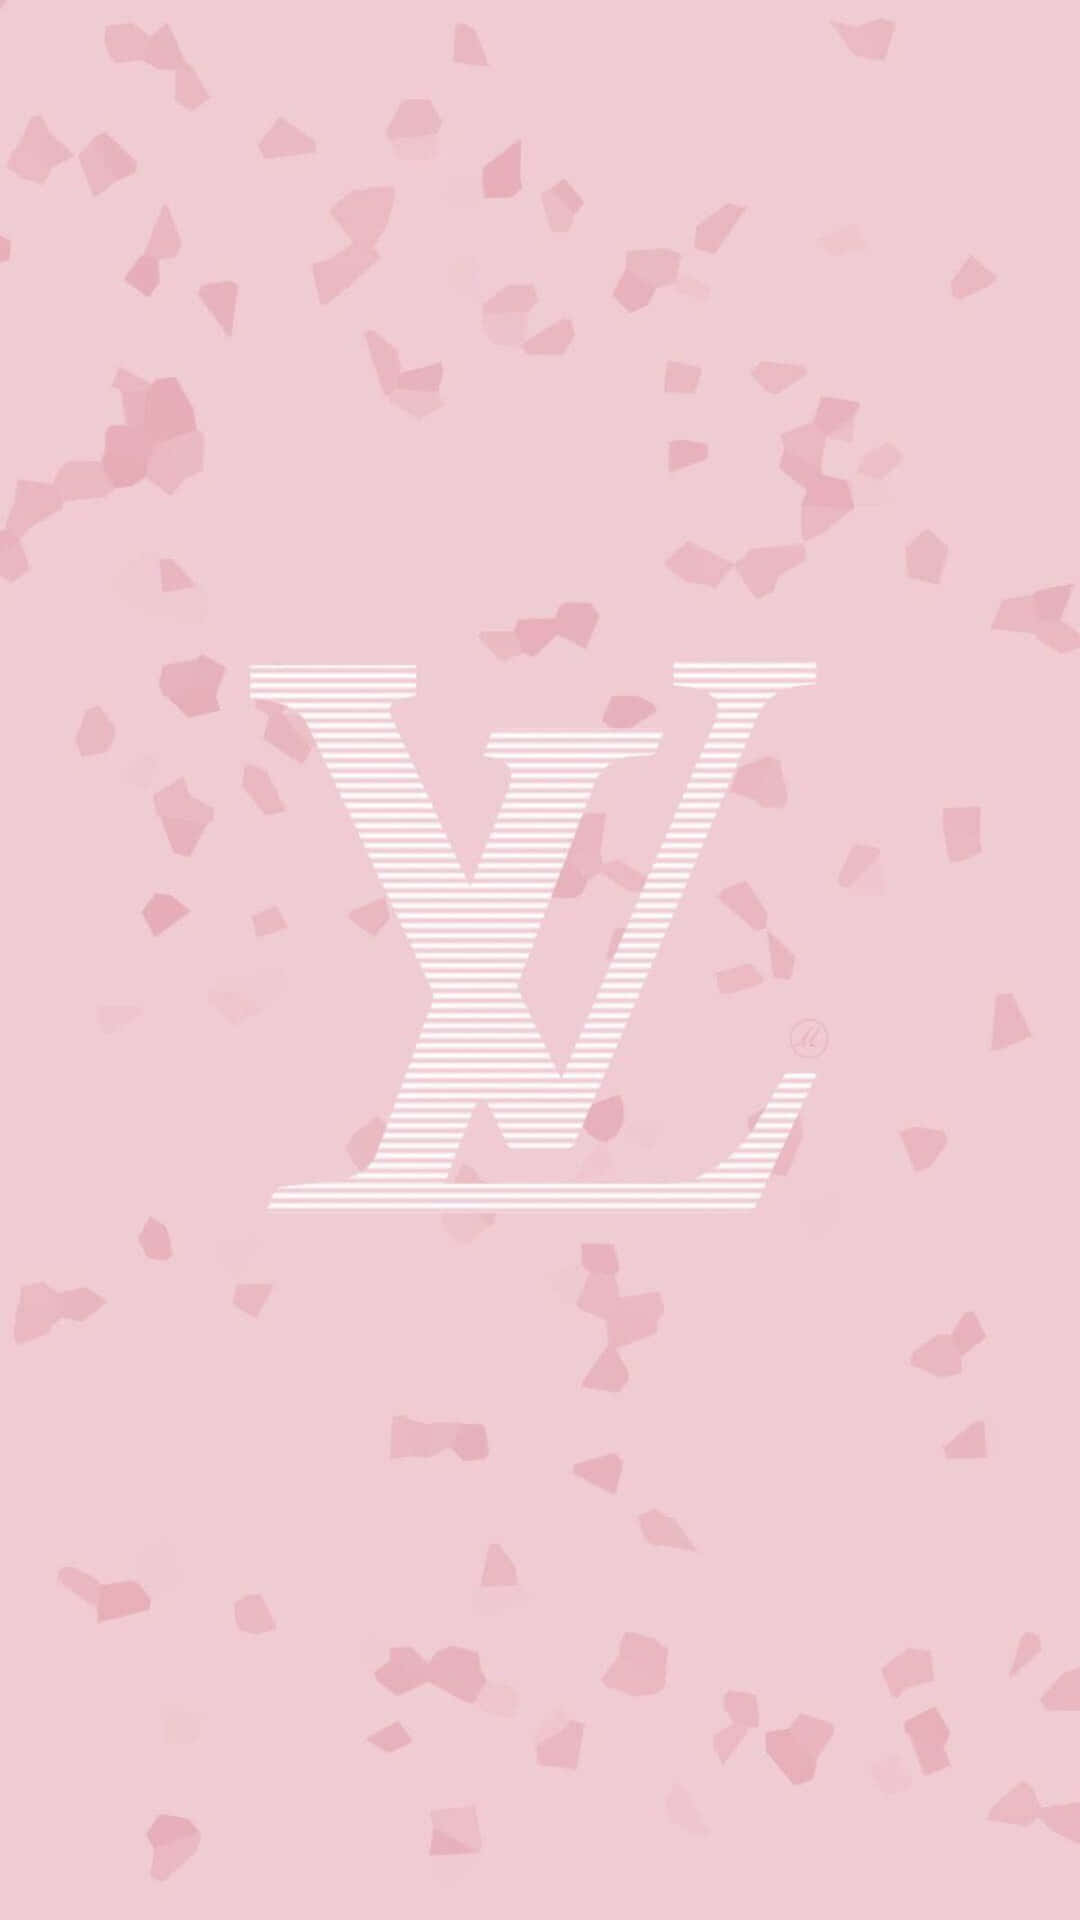 Download Hot Pink Louis Vuitton Mobile Wallpaper Wallpaper